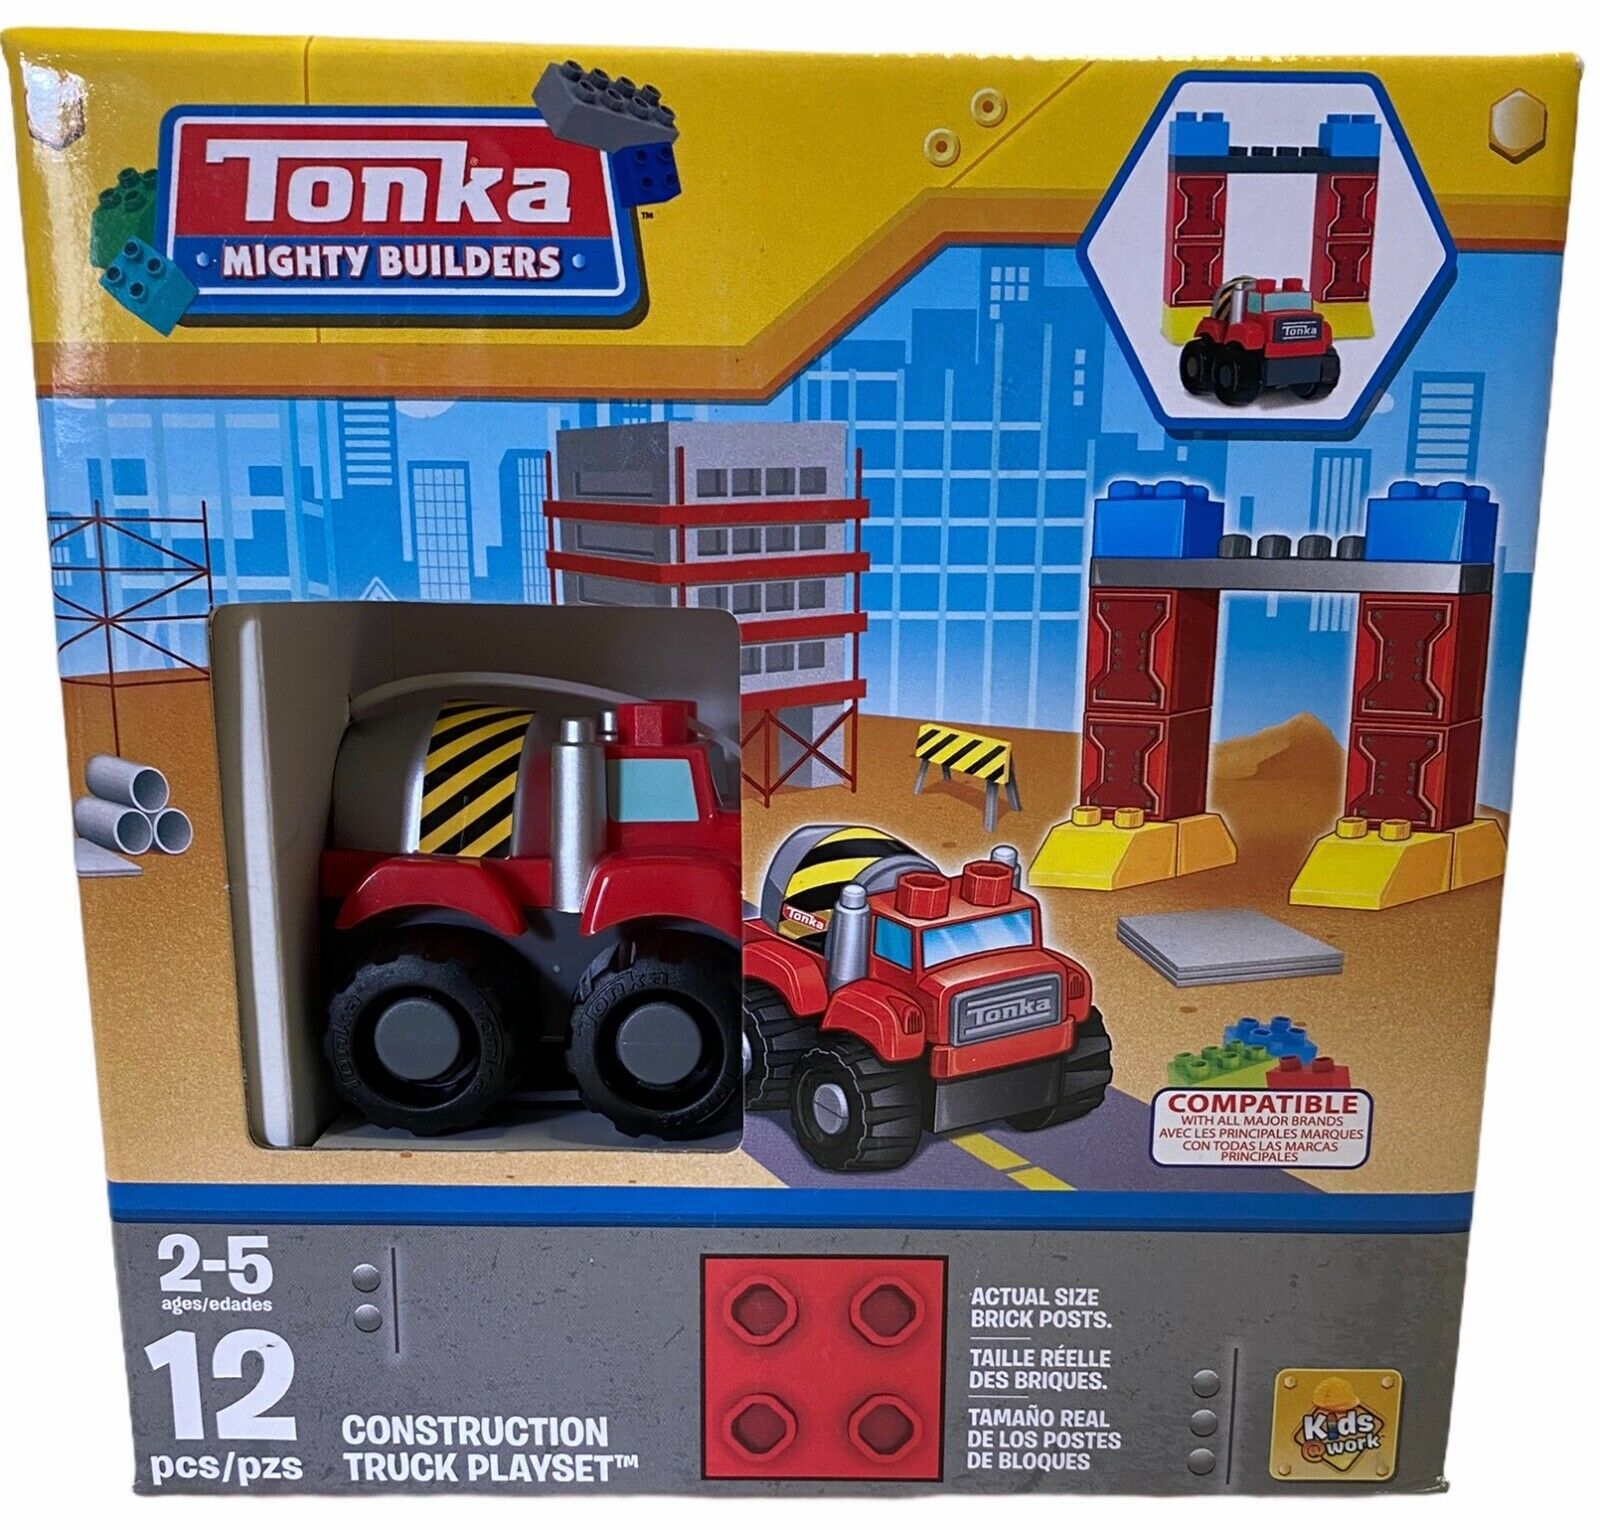 Tonka Mighty Builders CONSTRUCTION TRUCK 12 Pc Building Block Playset NEW - $9.94